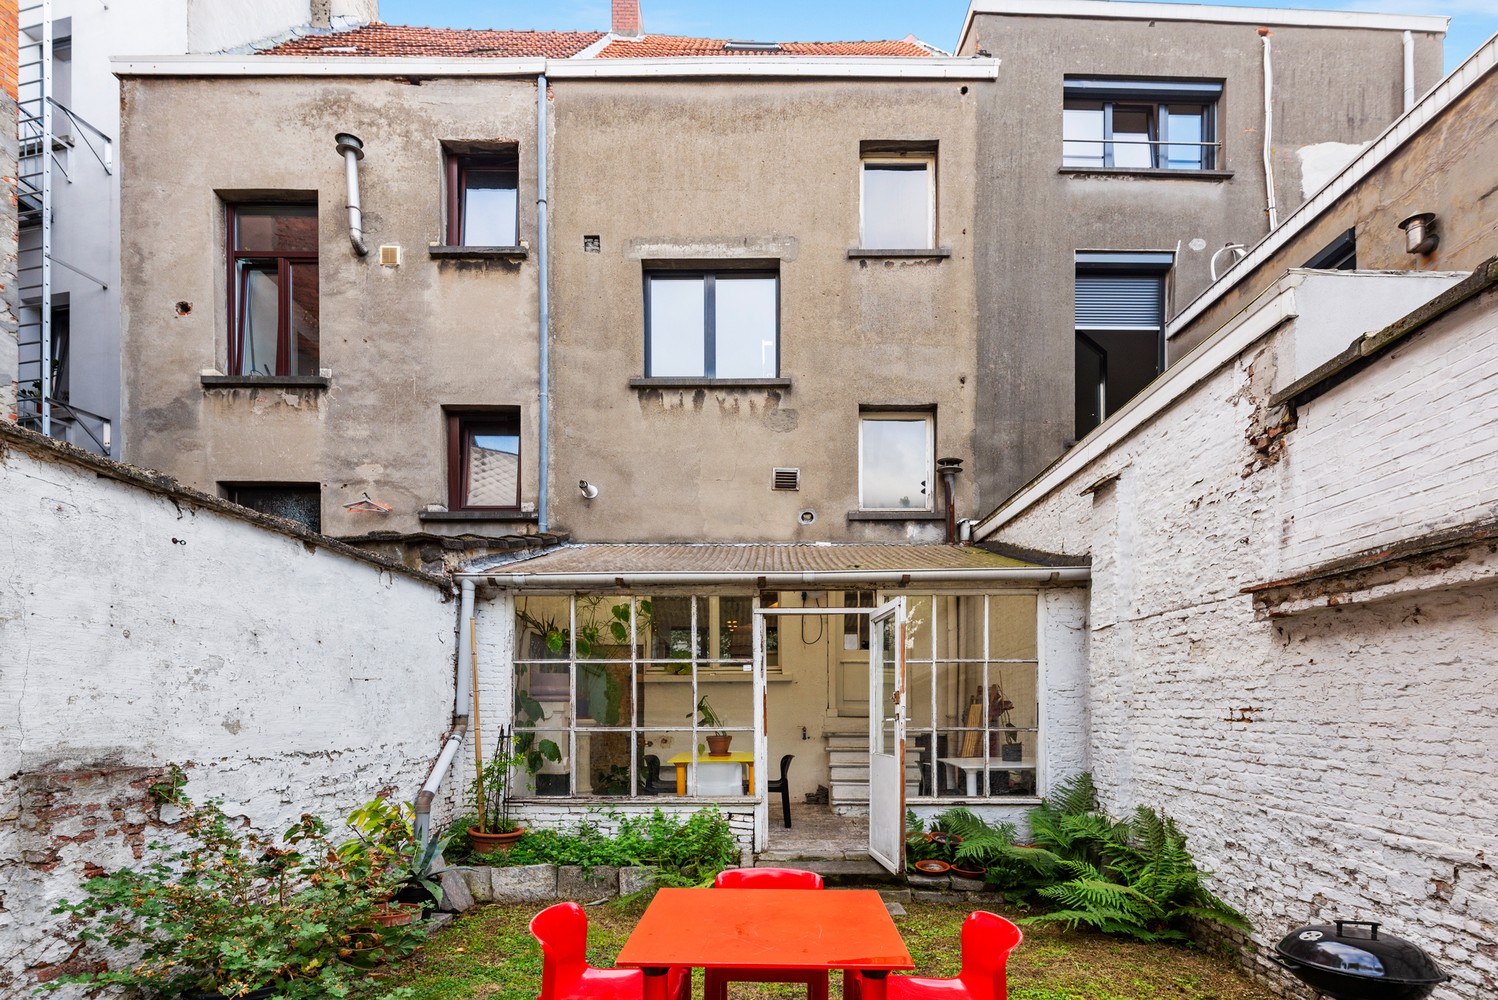 Unieke woning met twee slaapkamers, gezellige tuin & lage garage in Antwerpen! afbeelding 14